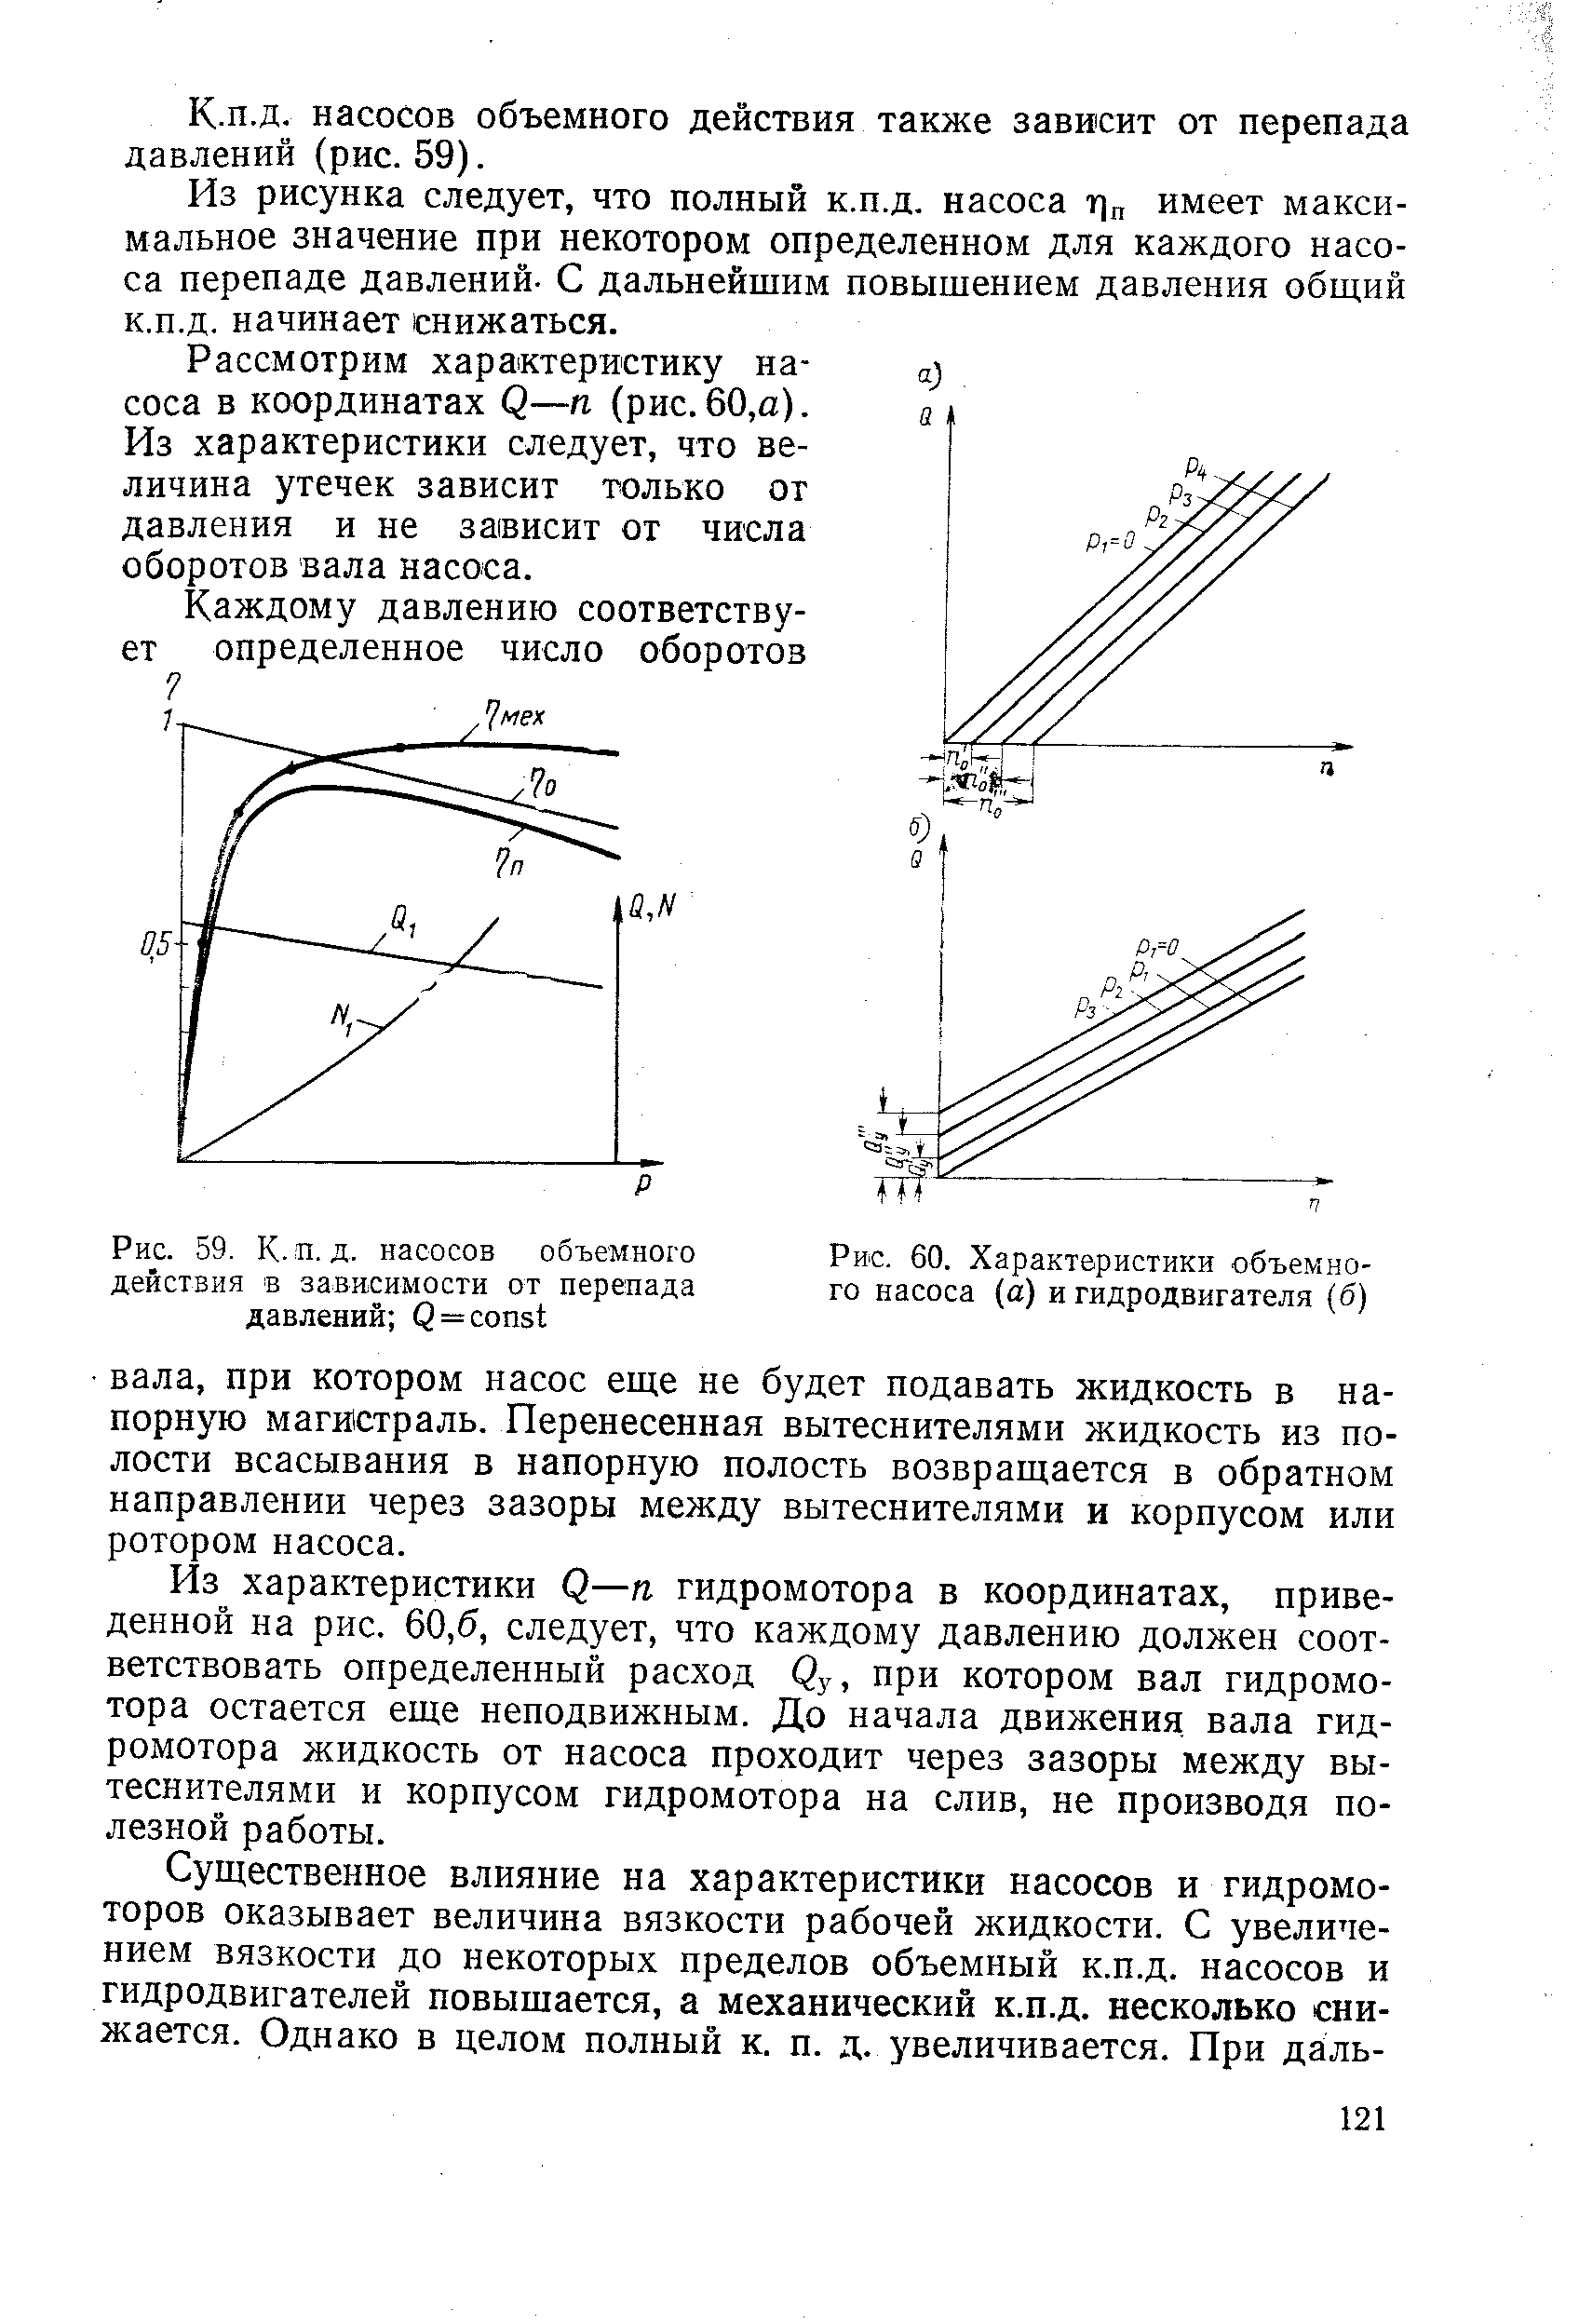 Рис. 60. Характеристики объемного насоса (а) и гидродвигателя (б)
